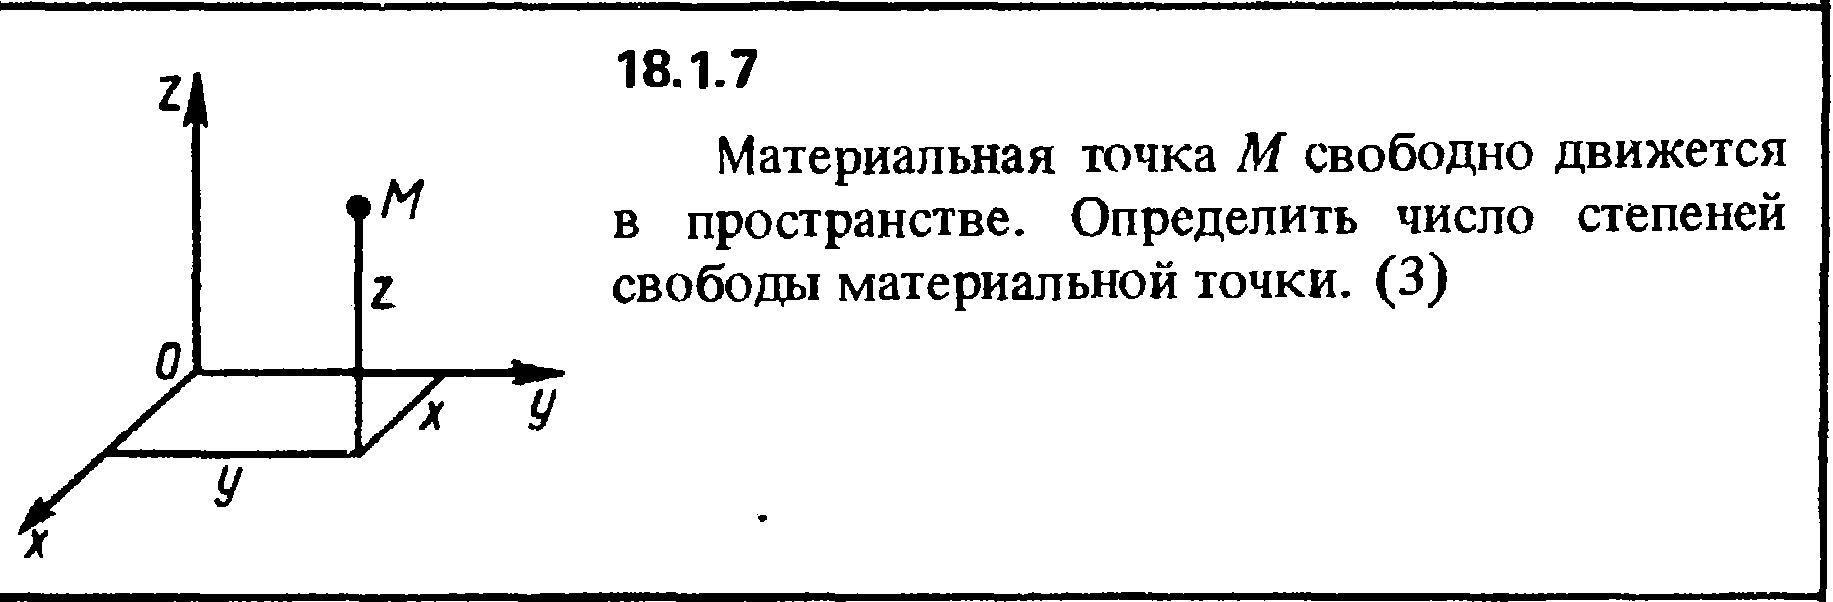 Решение18.1.7 из сборника (решебника) Кепе О.Е. 1989 г